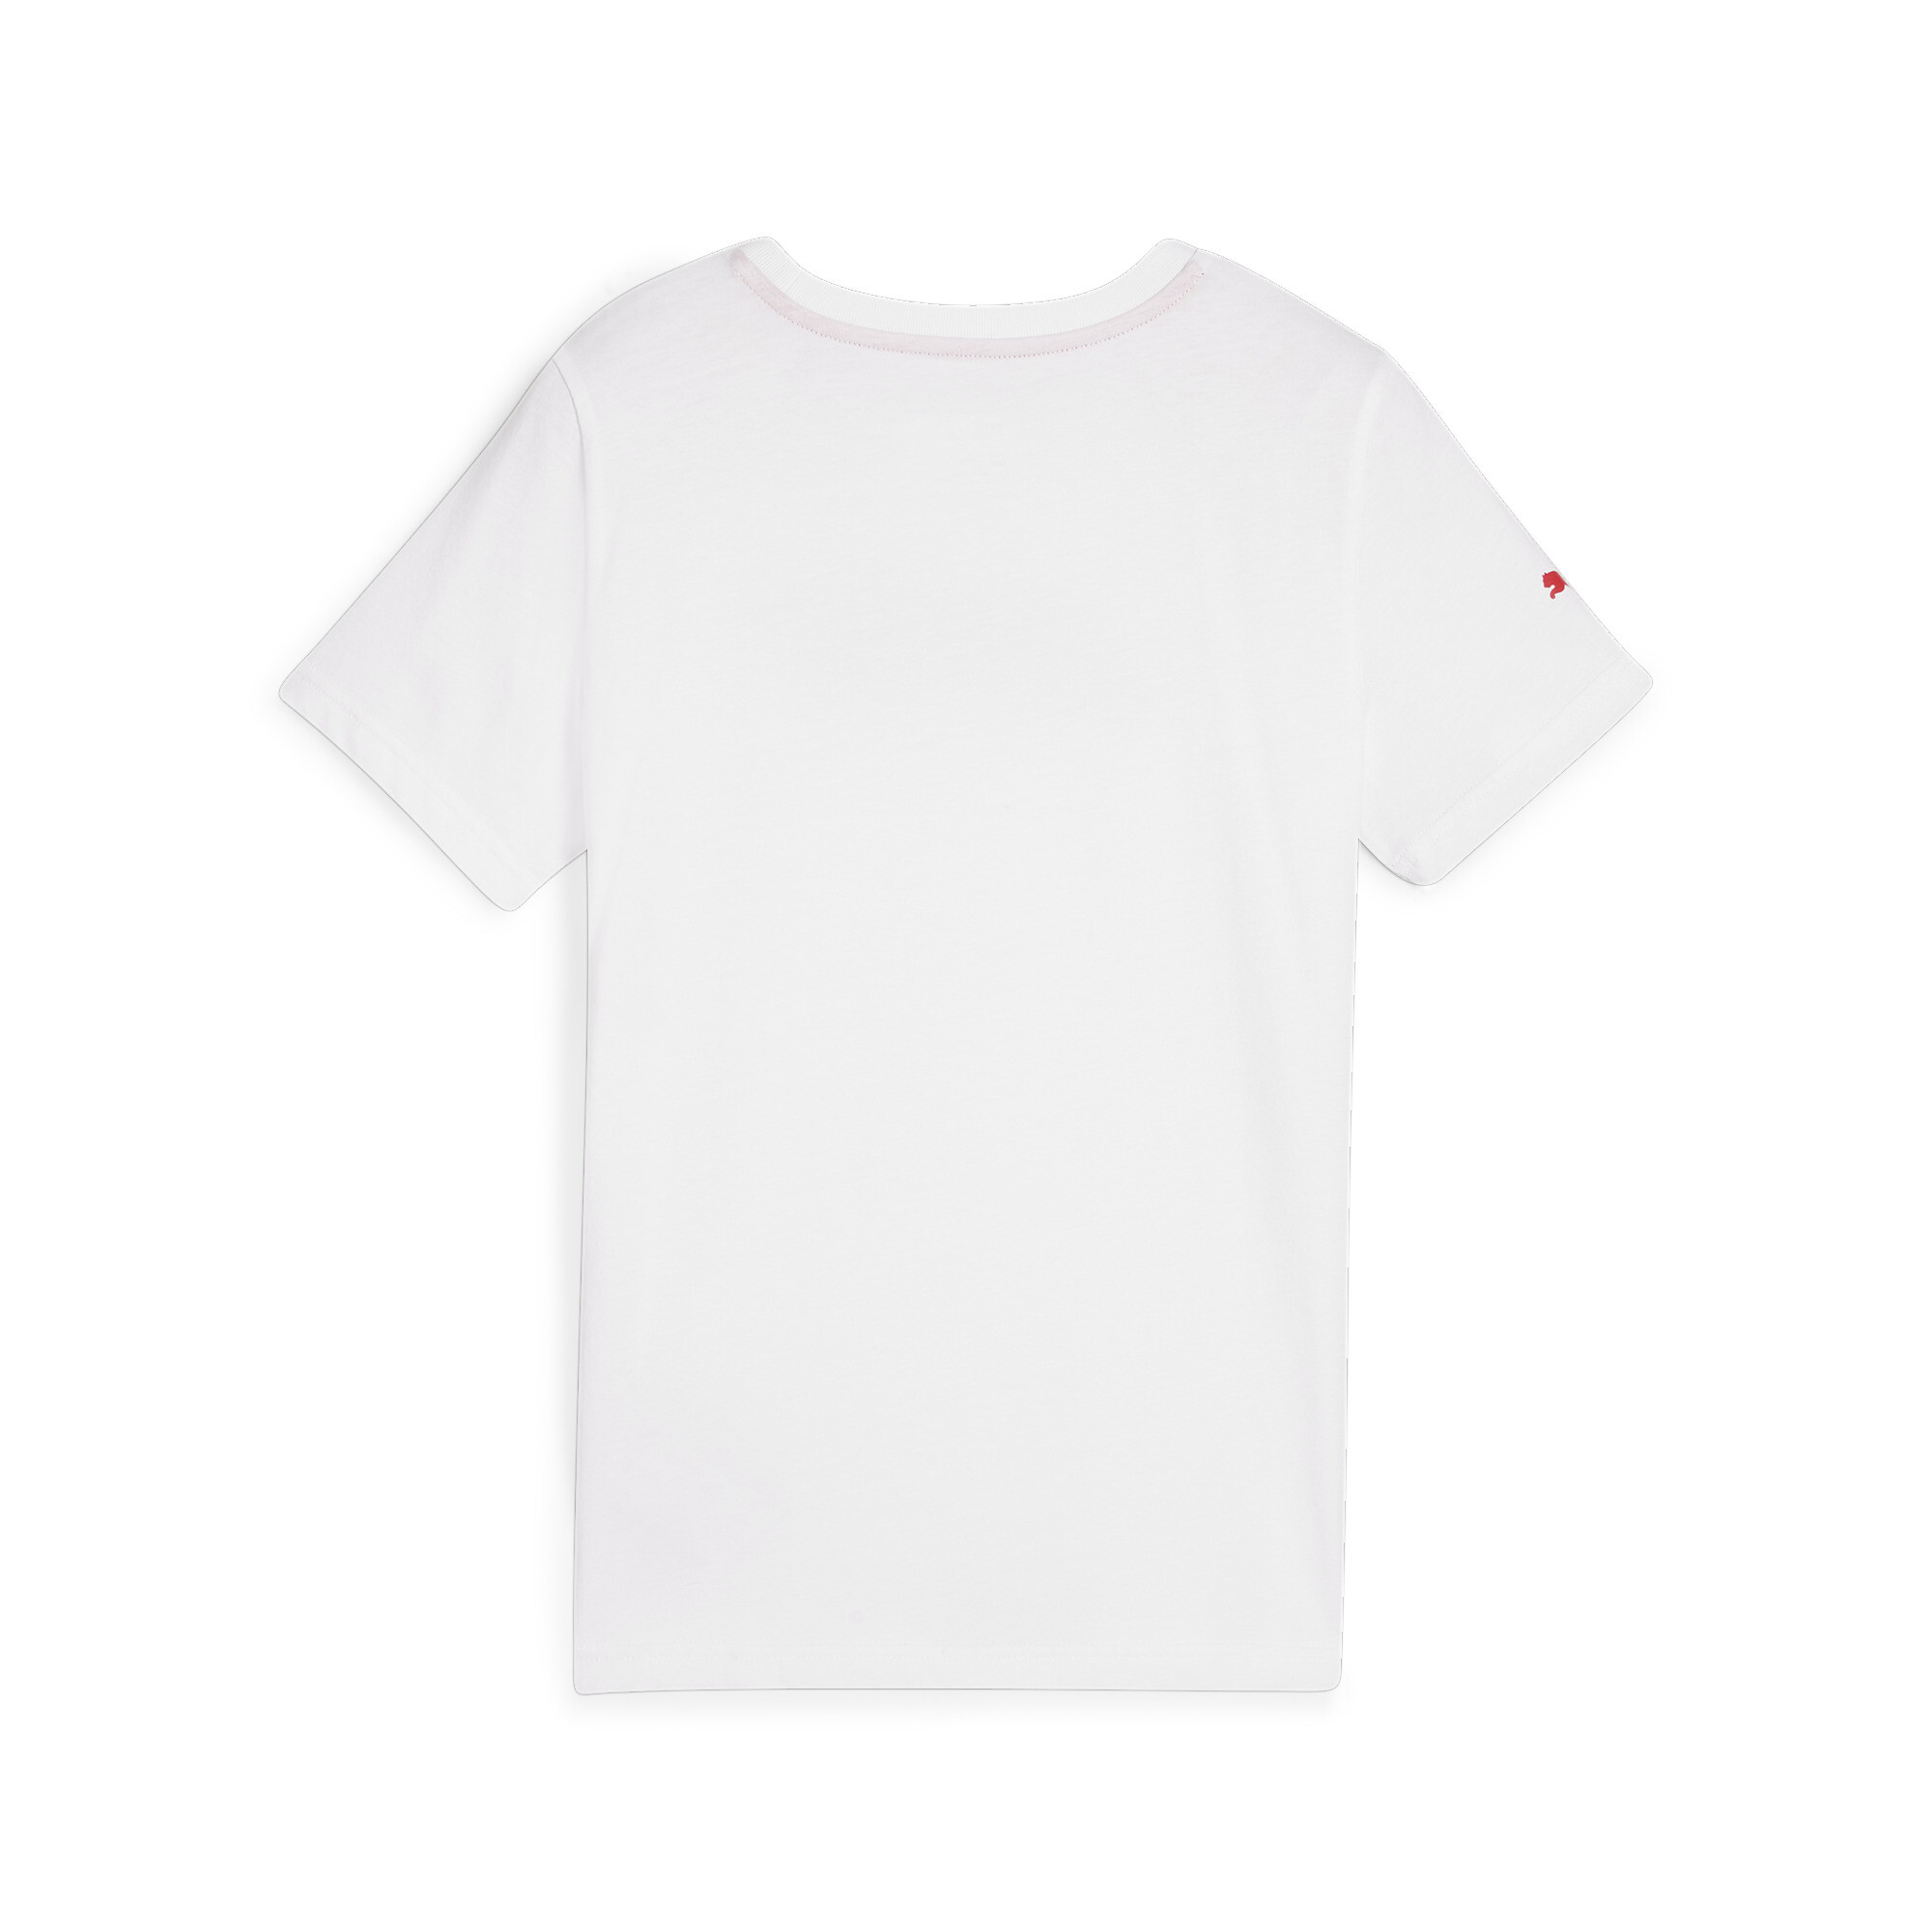 Men's Puma F1Â® ESS Youth Motorsport T-Shirt, White, Size 13-14Y, Age